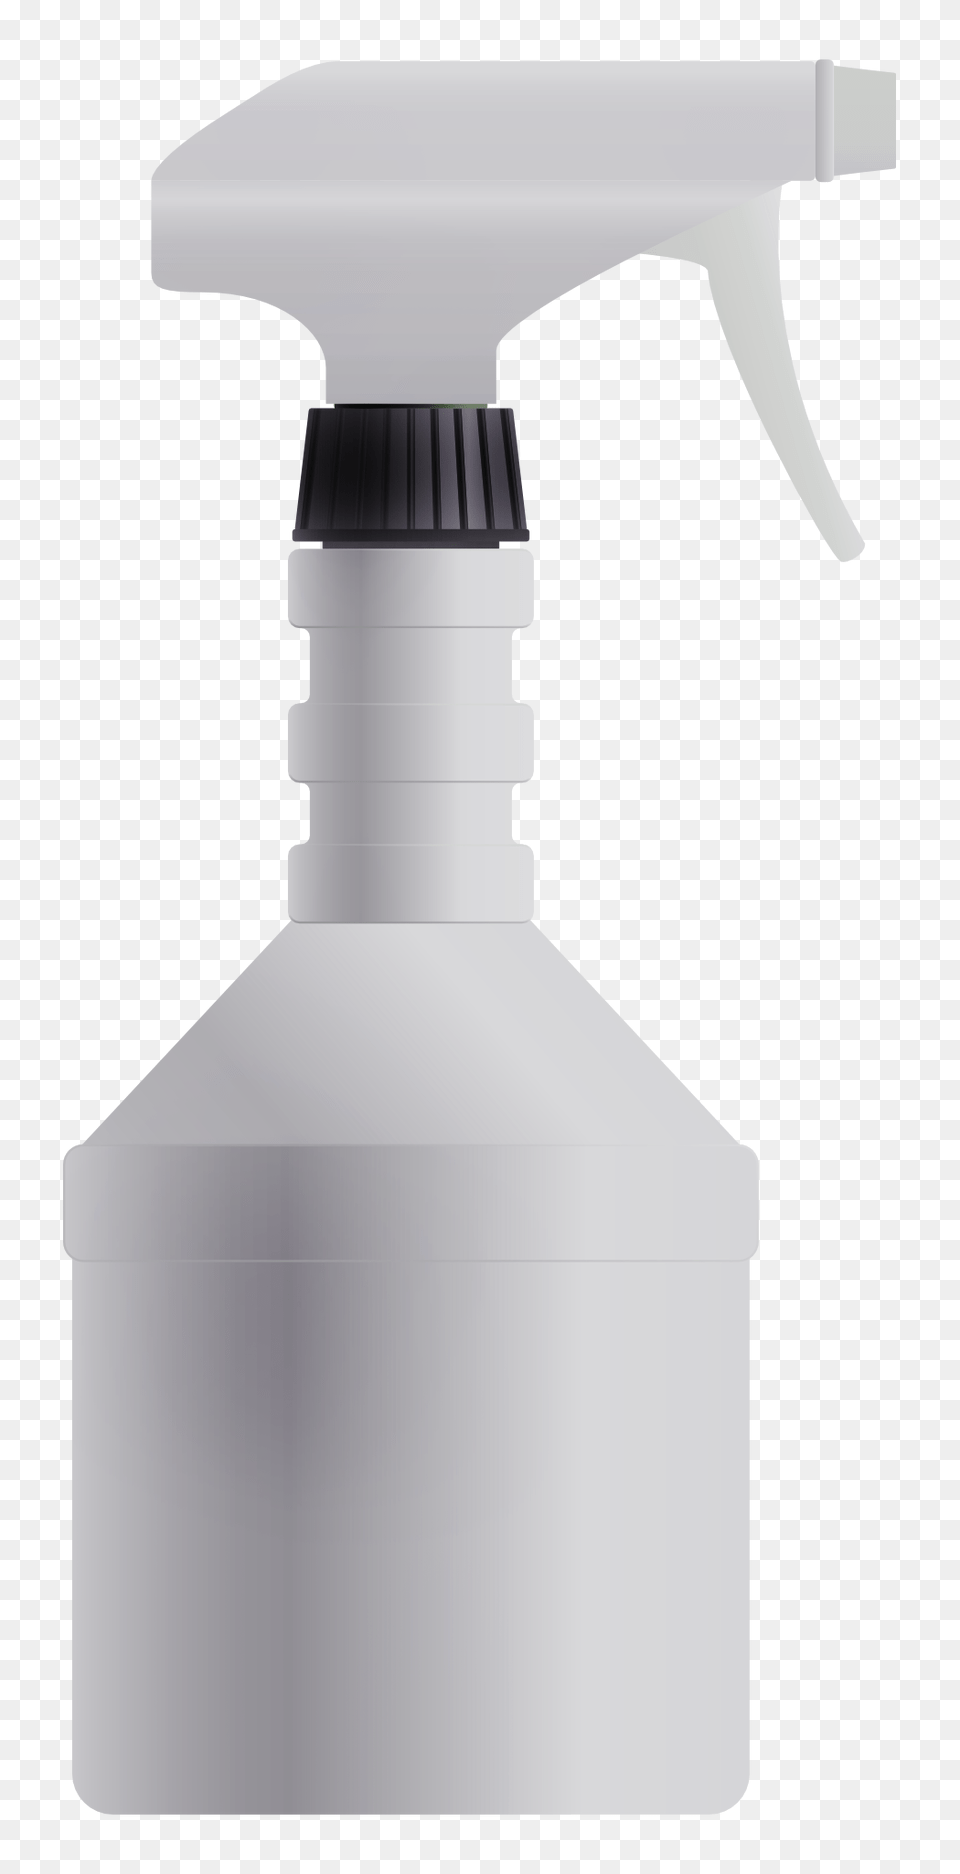 Pngpix Com Water Sprayer Vector Transparent, Can, Spray Can, Tin, Bottle Png Image